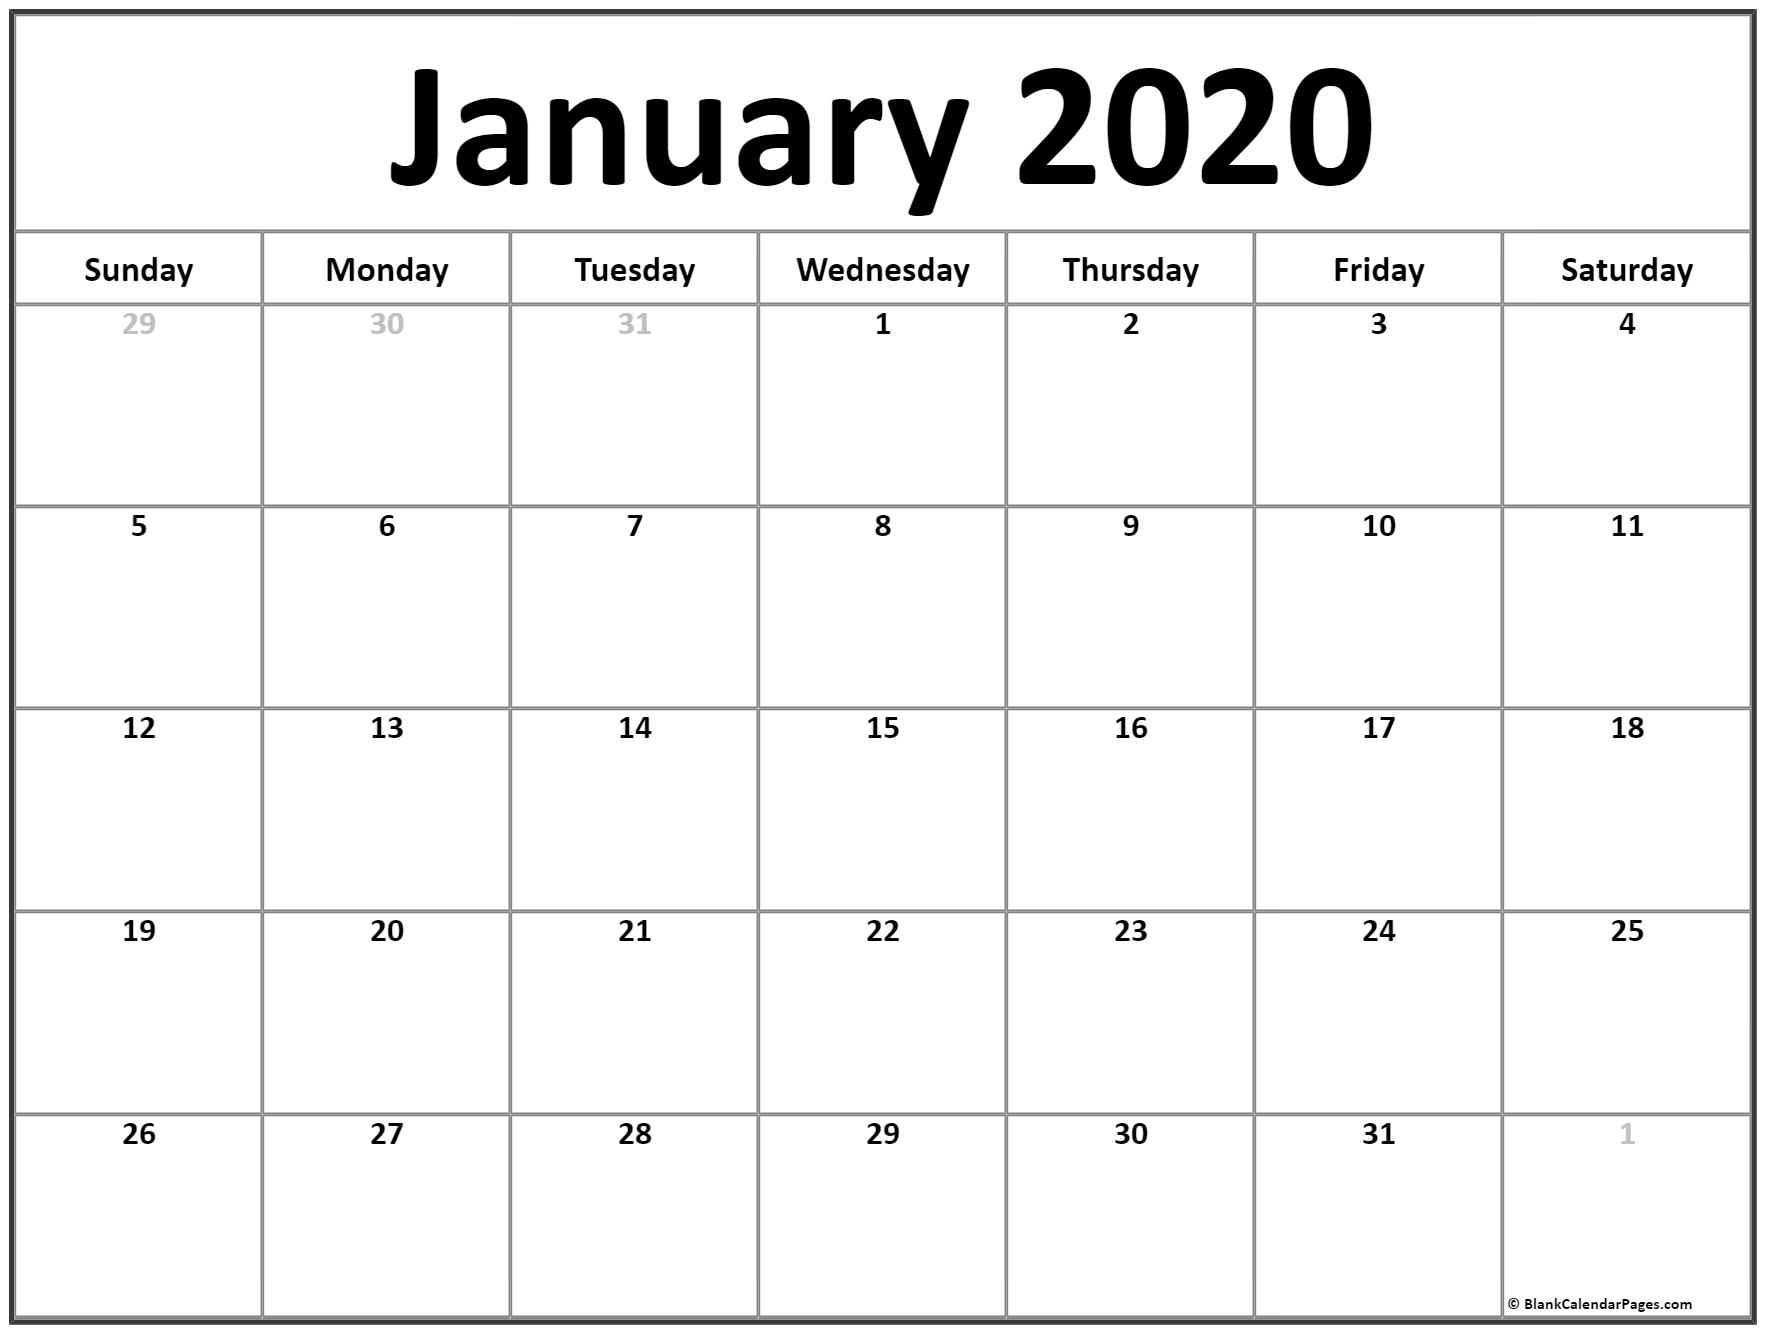 Calendar January 2020 Template - Togo.wpart.co